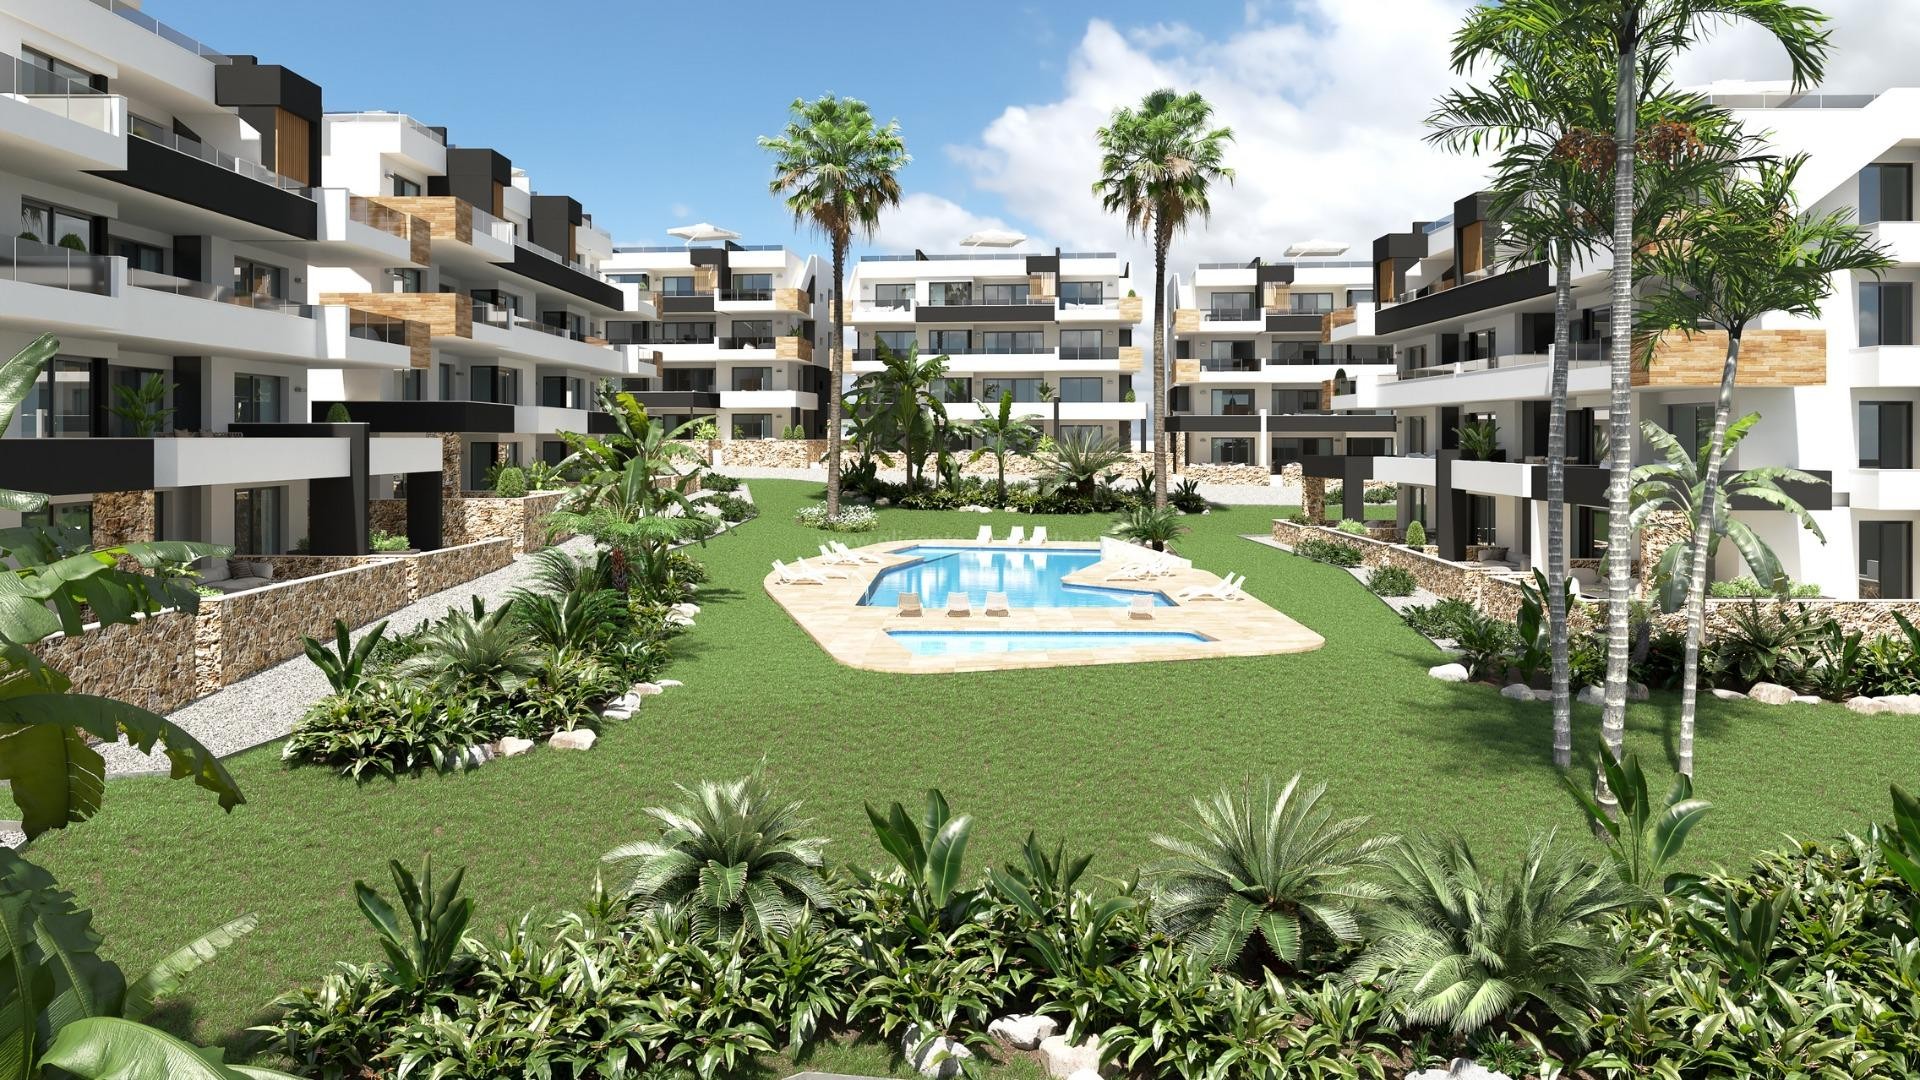 Flats in Los Altos, Orihuela Costa, Alicante Province, 2 bedrooms, 2 bathrooms, large terrace or penthouse with solarium, pool, gym